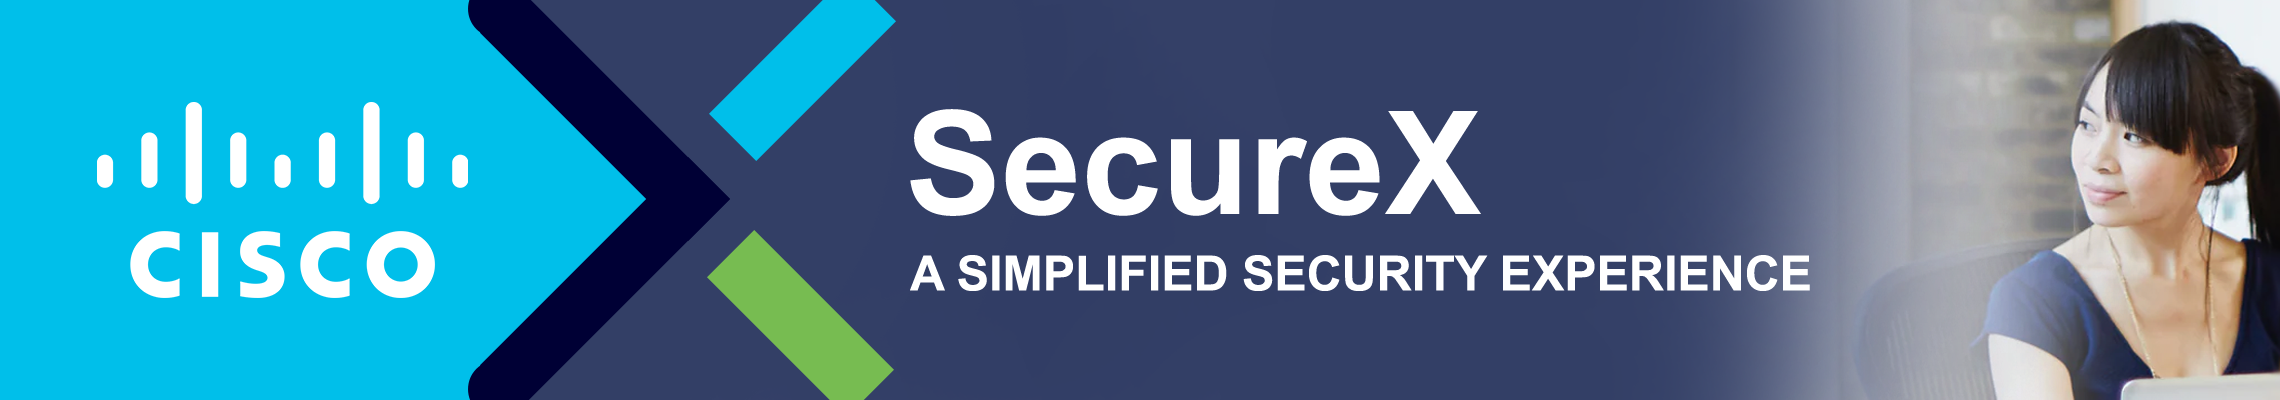 Cisco SecureX Banners